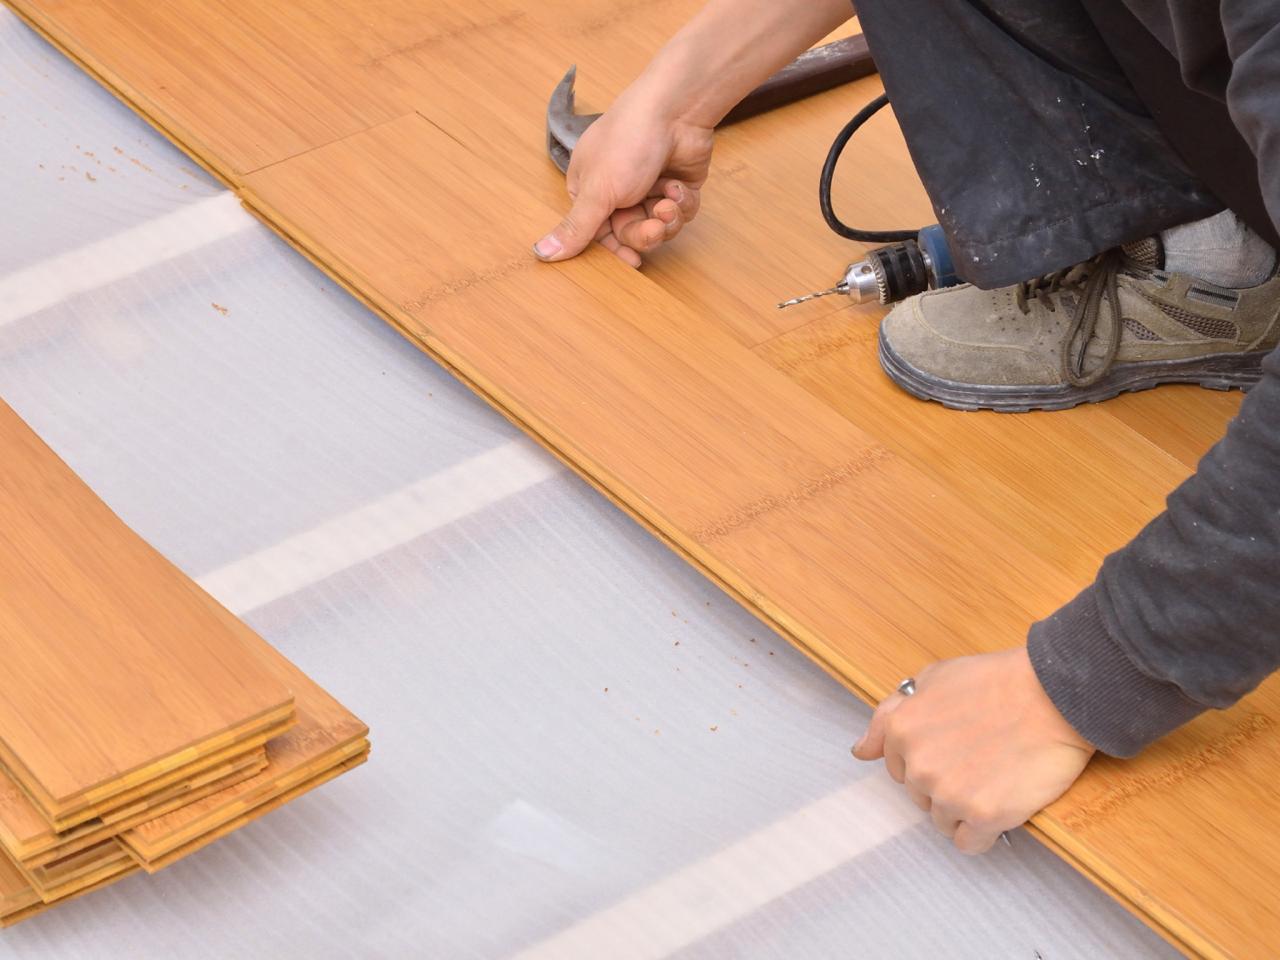 Bamboo Floor Installation Diy, Install Bamboo Flooring On Concrete